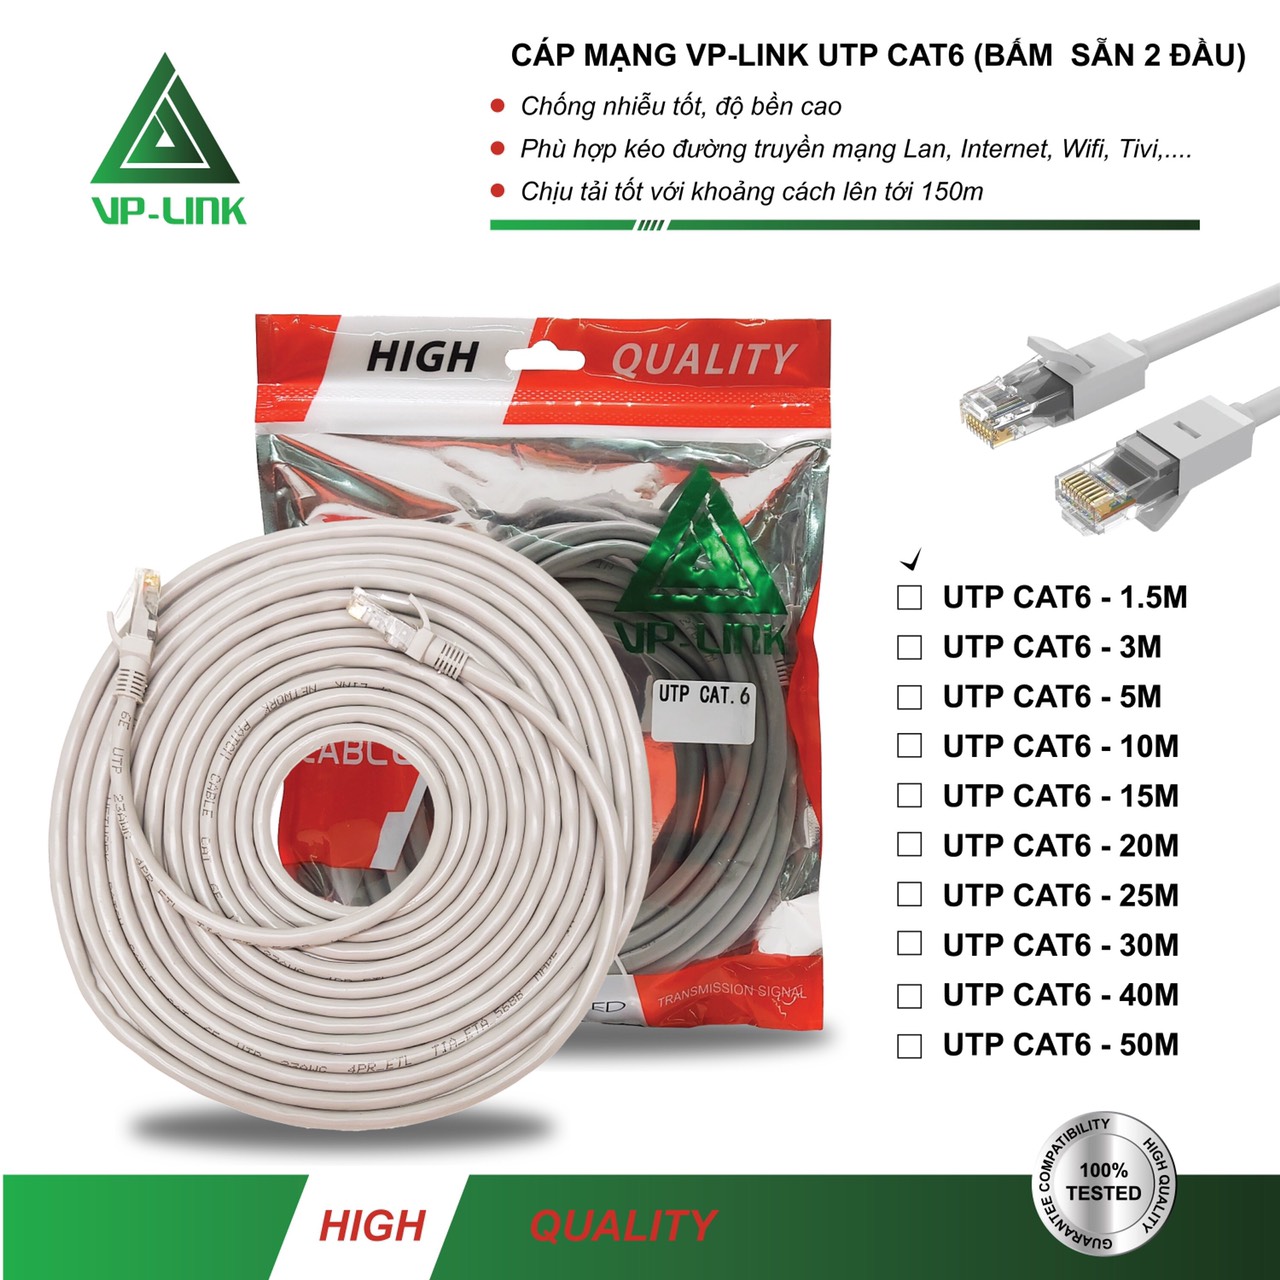 Cable LAN VP-LINK UTP CAT6 10m Bấm sẵn 2 đầu